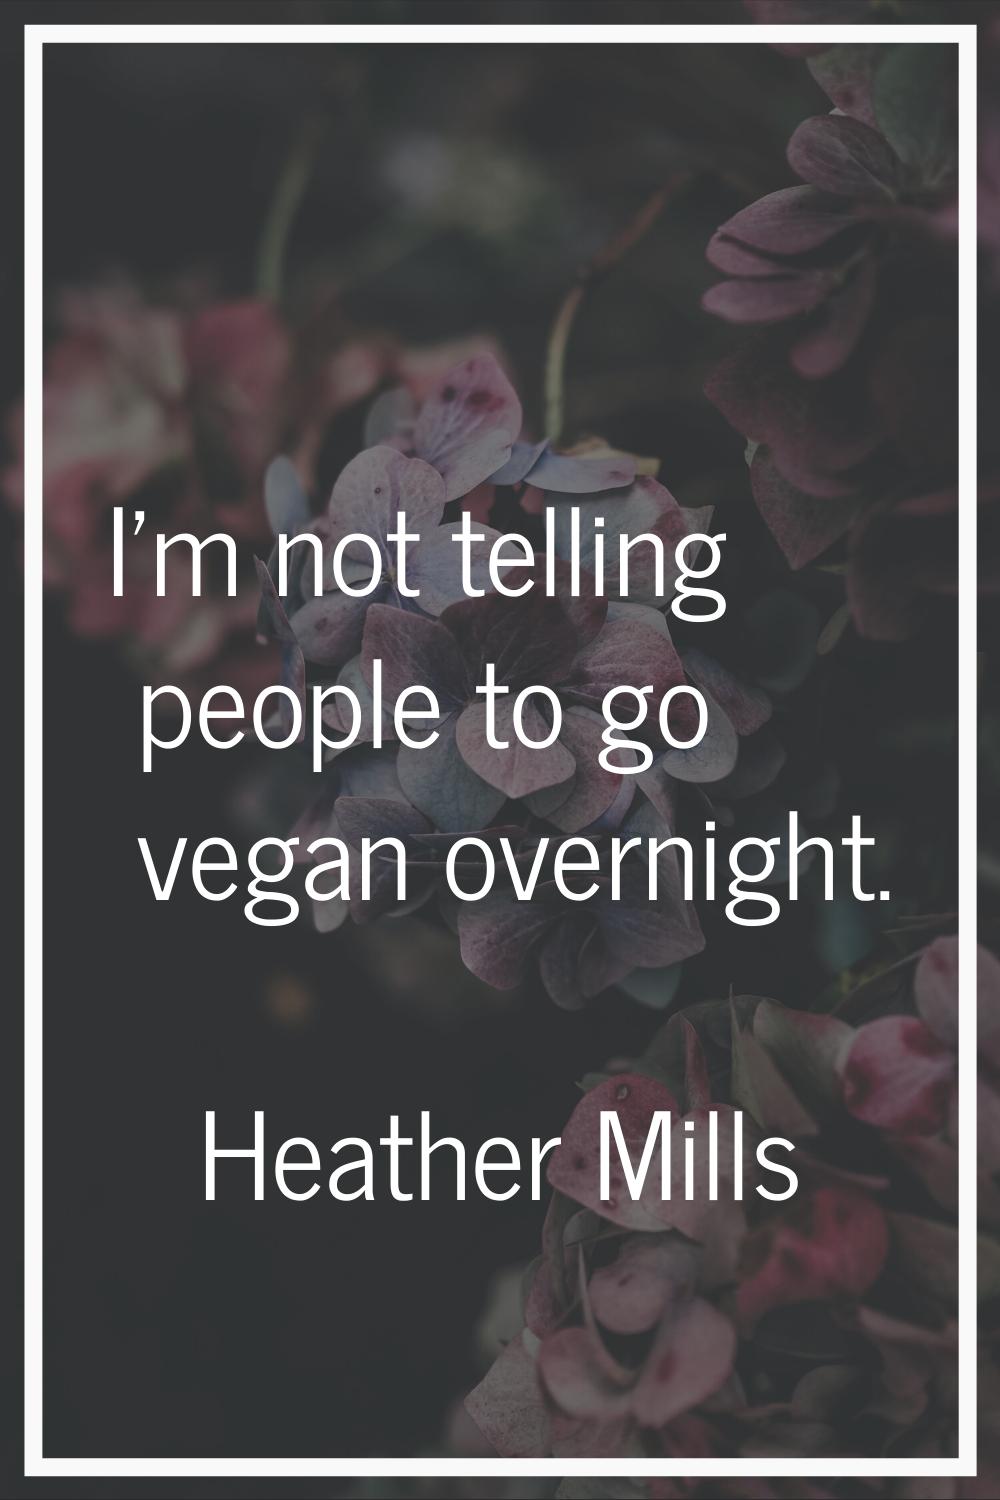 I'm not telling people to go vegan overnight.